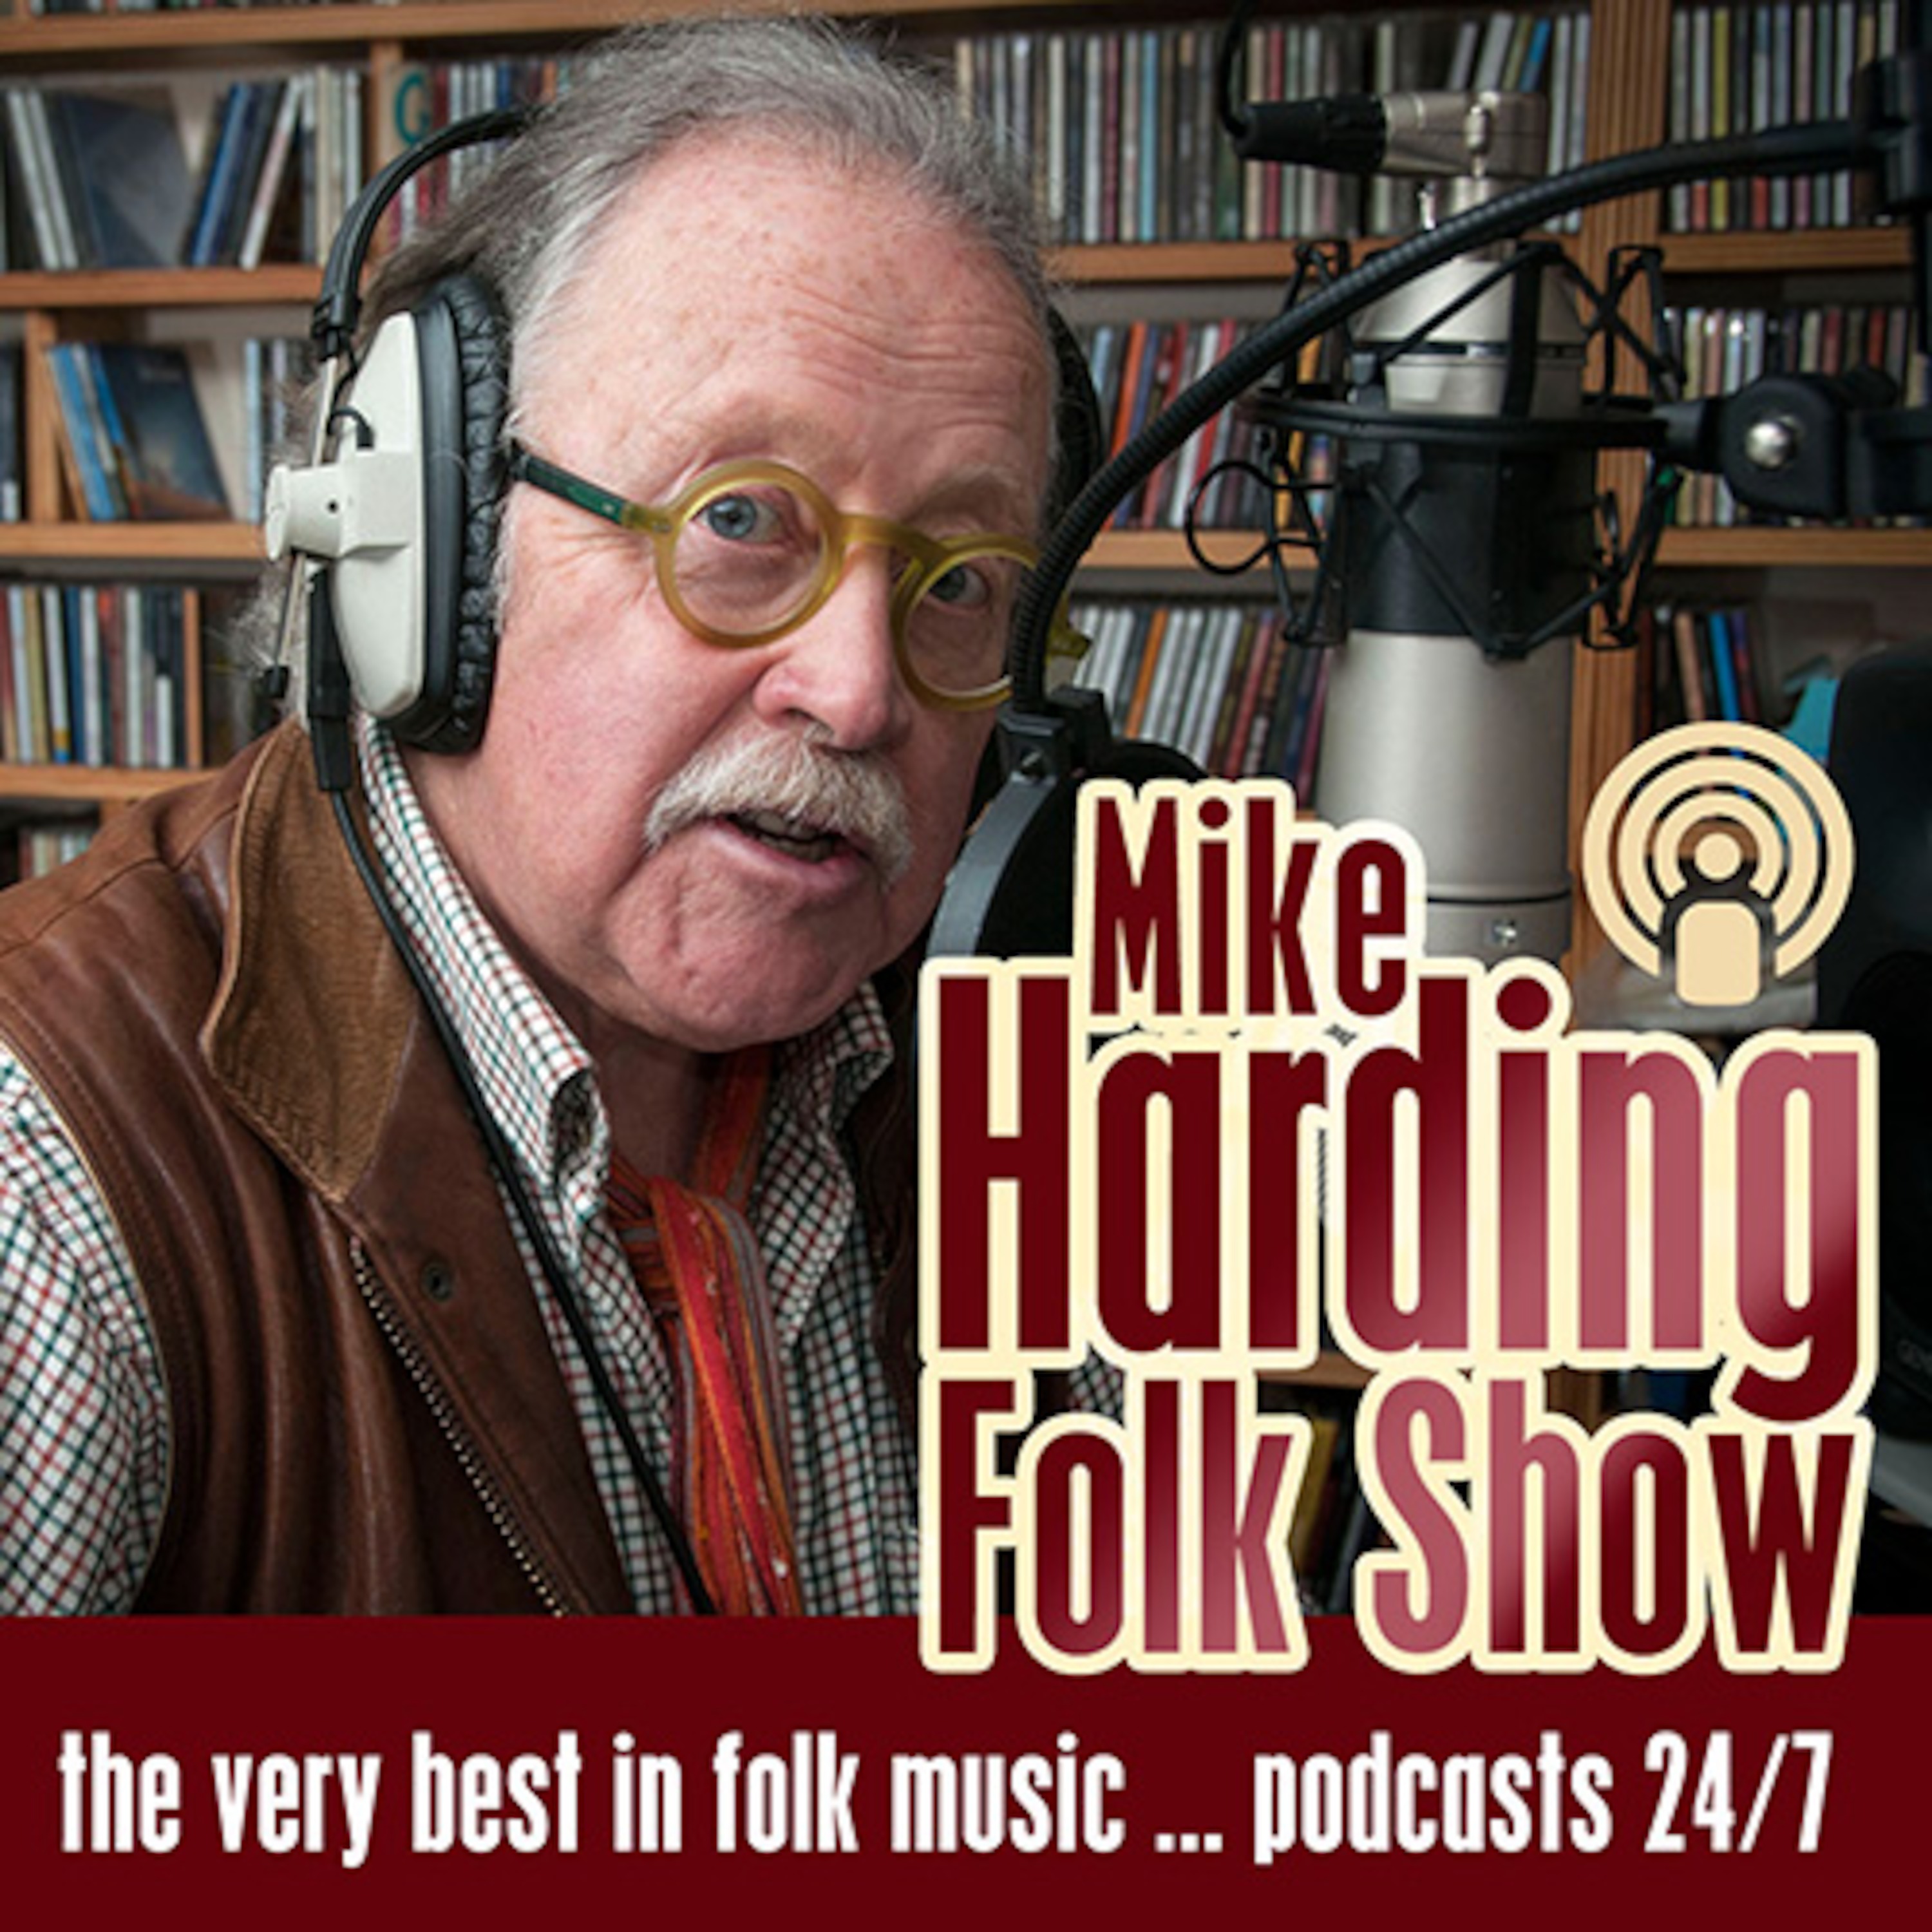 Mike Harding Folk Show 23